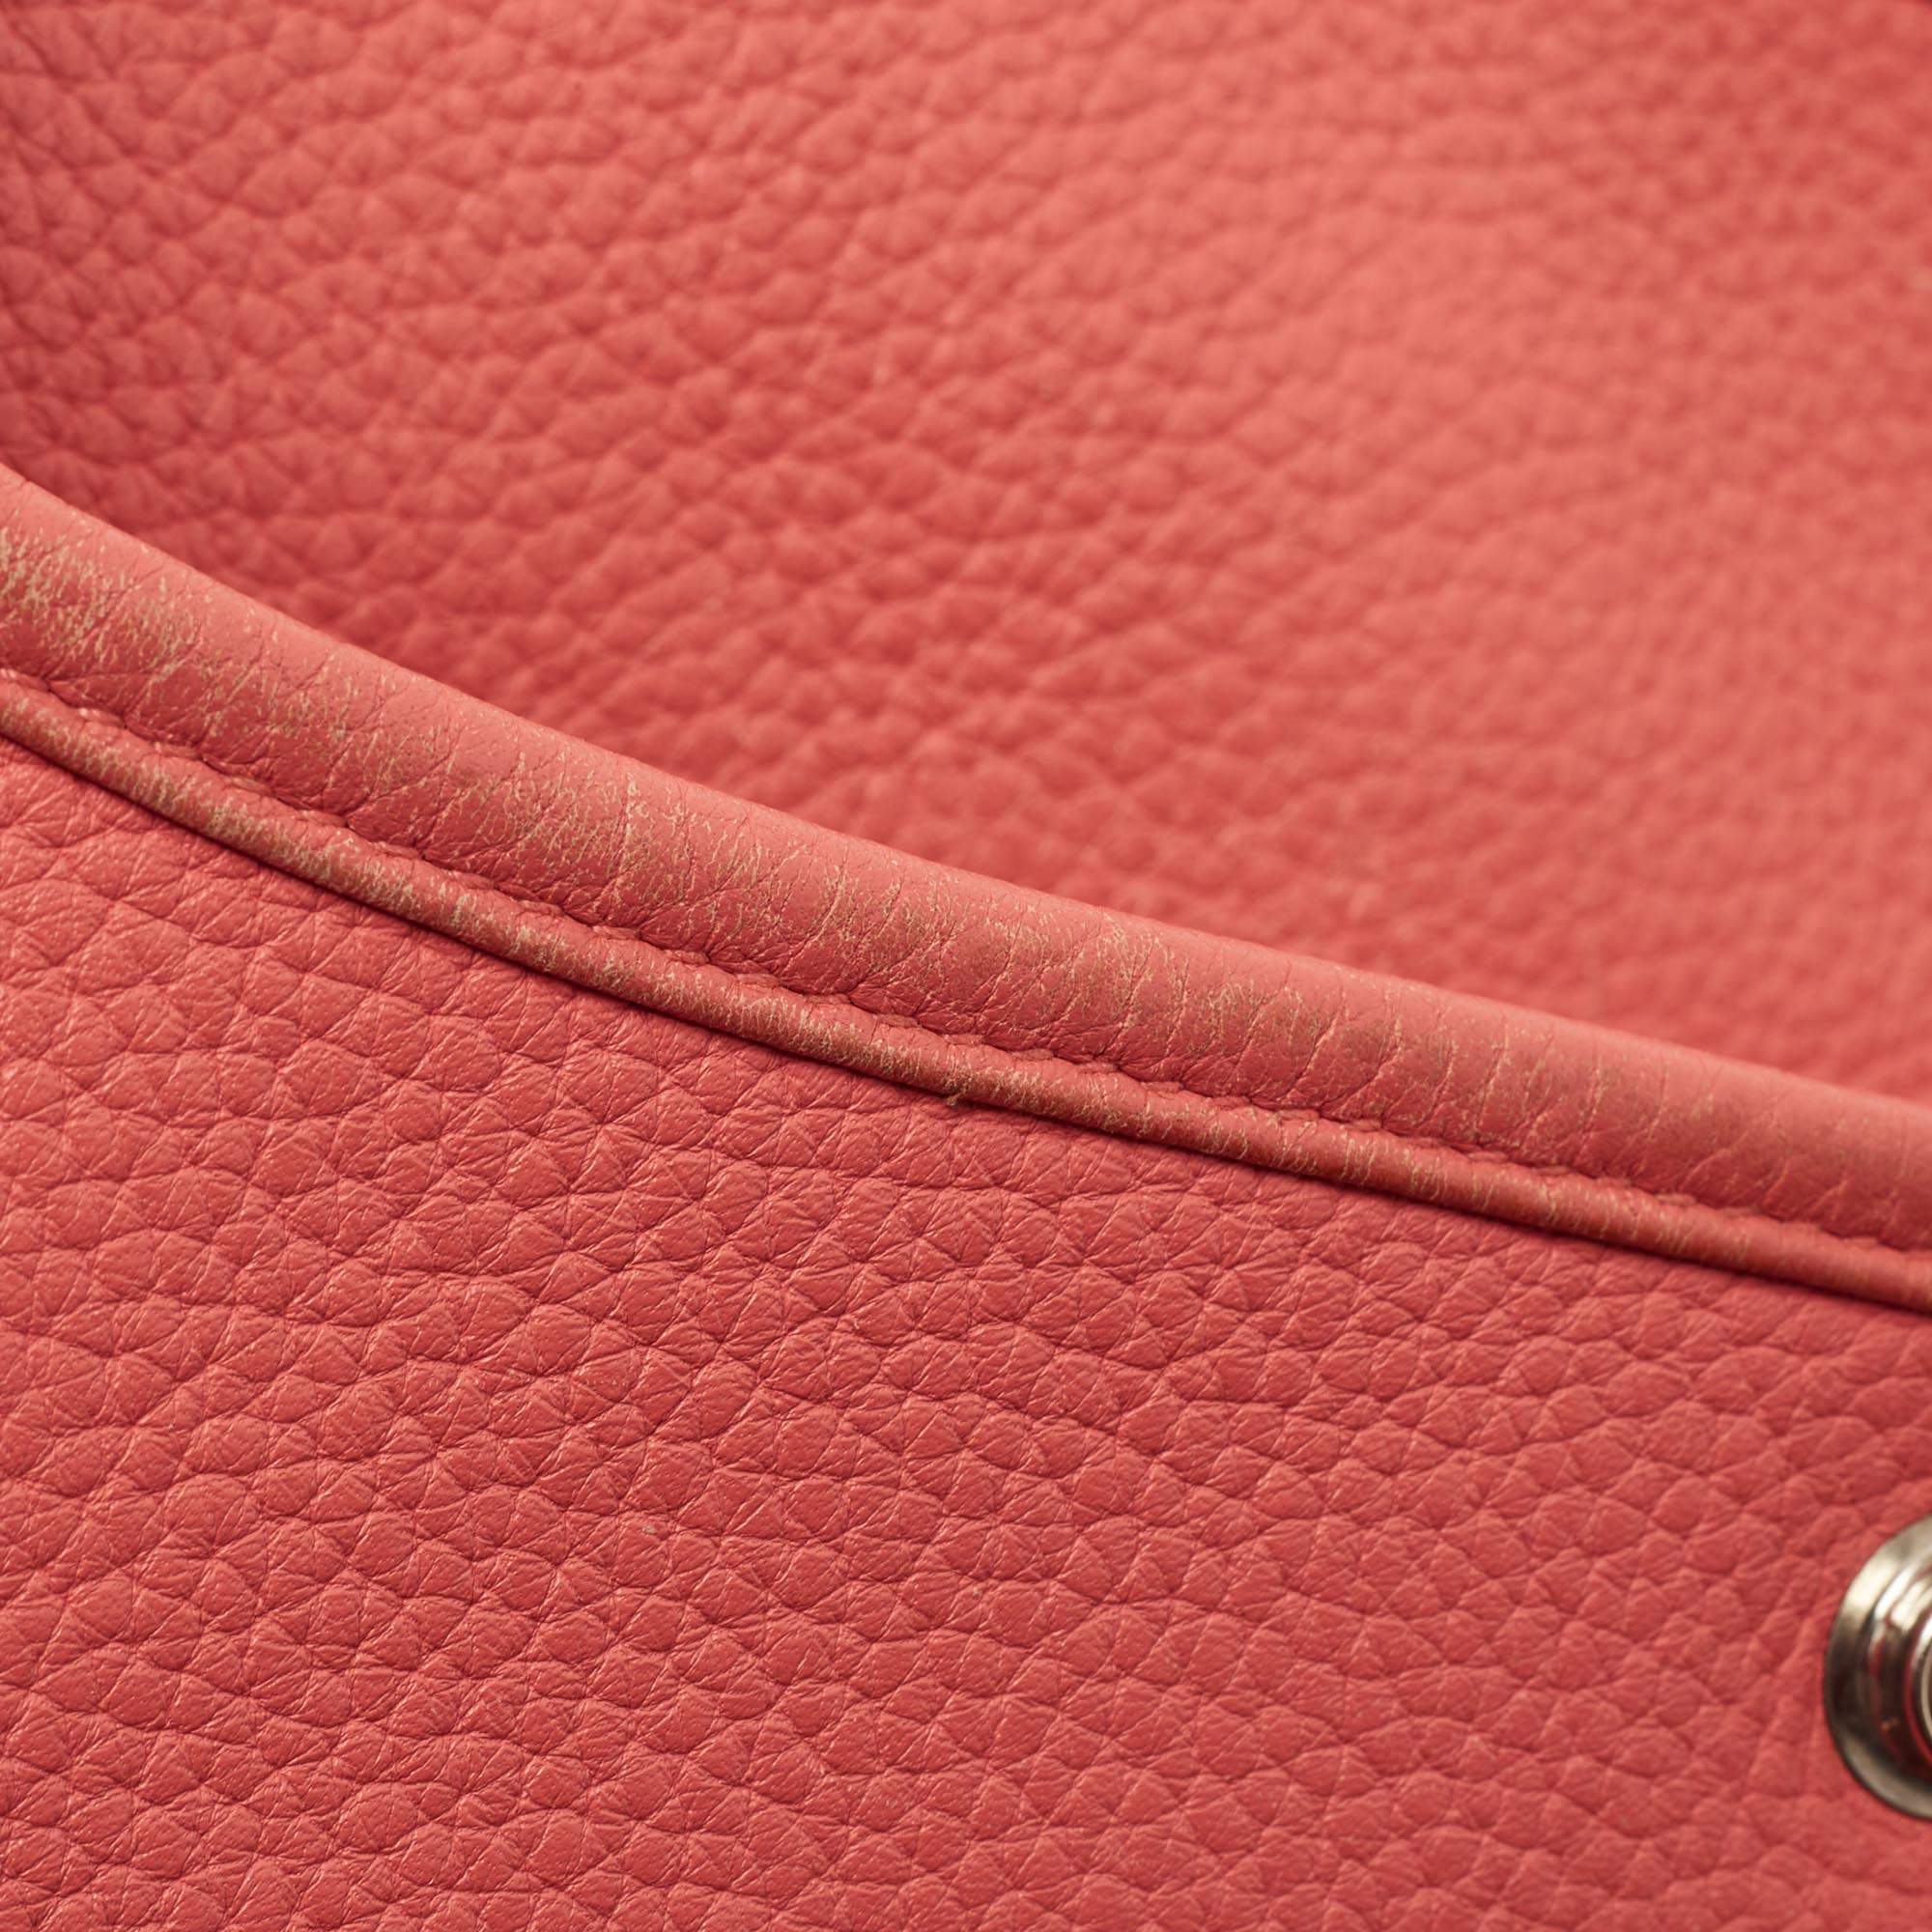 Rose Jaipur Clemence Leather Evelyne TPM Bag @ 165,000 17% off the